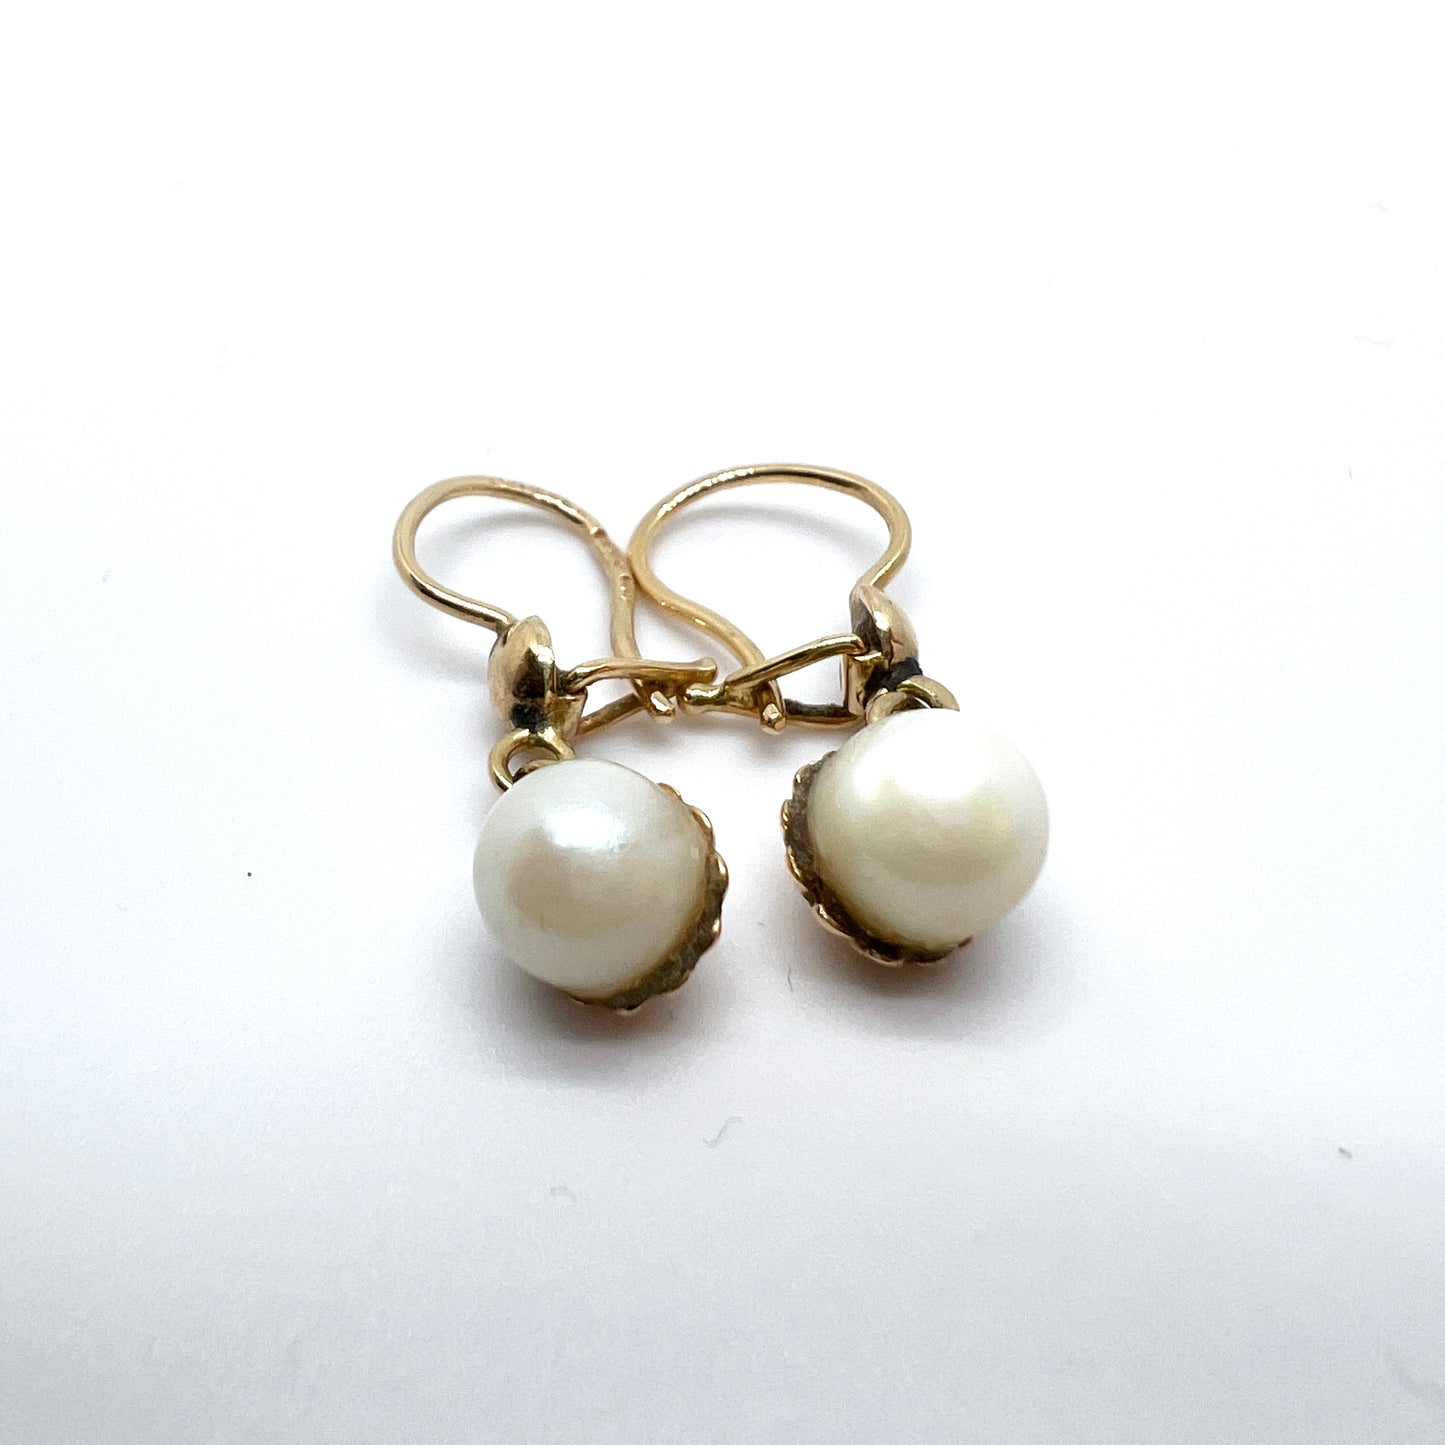 Sweden 1964 Vintage 18k Gold Cultured Pearl Earrings.